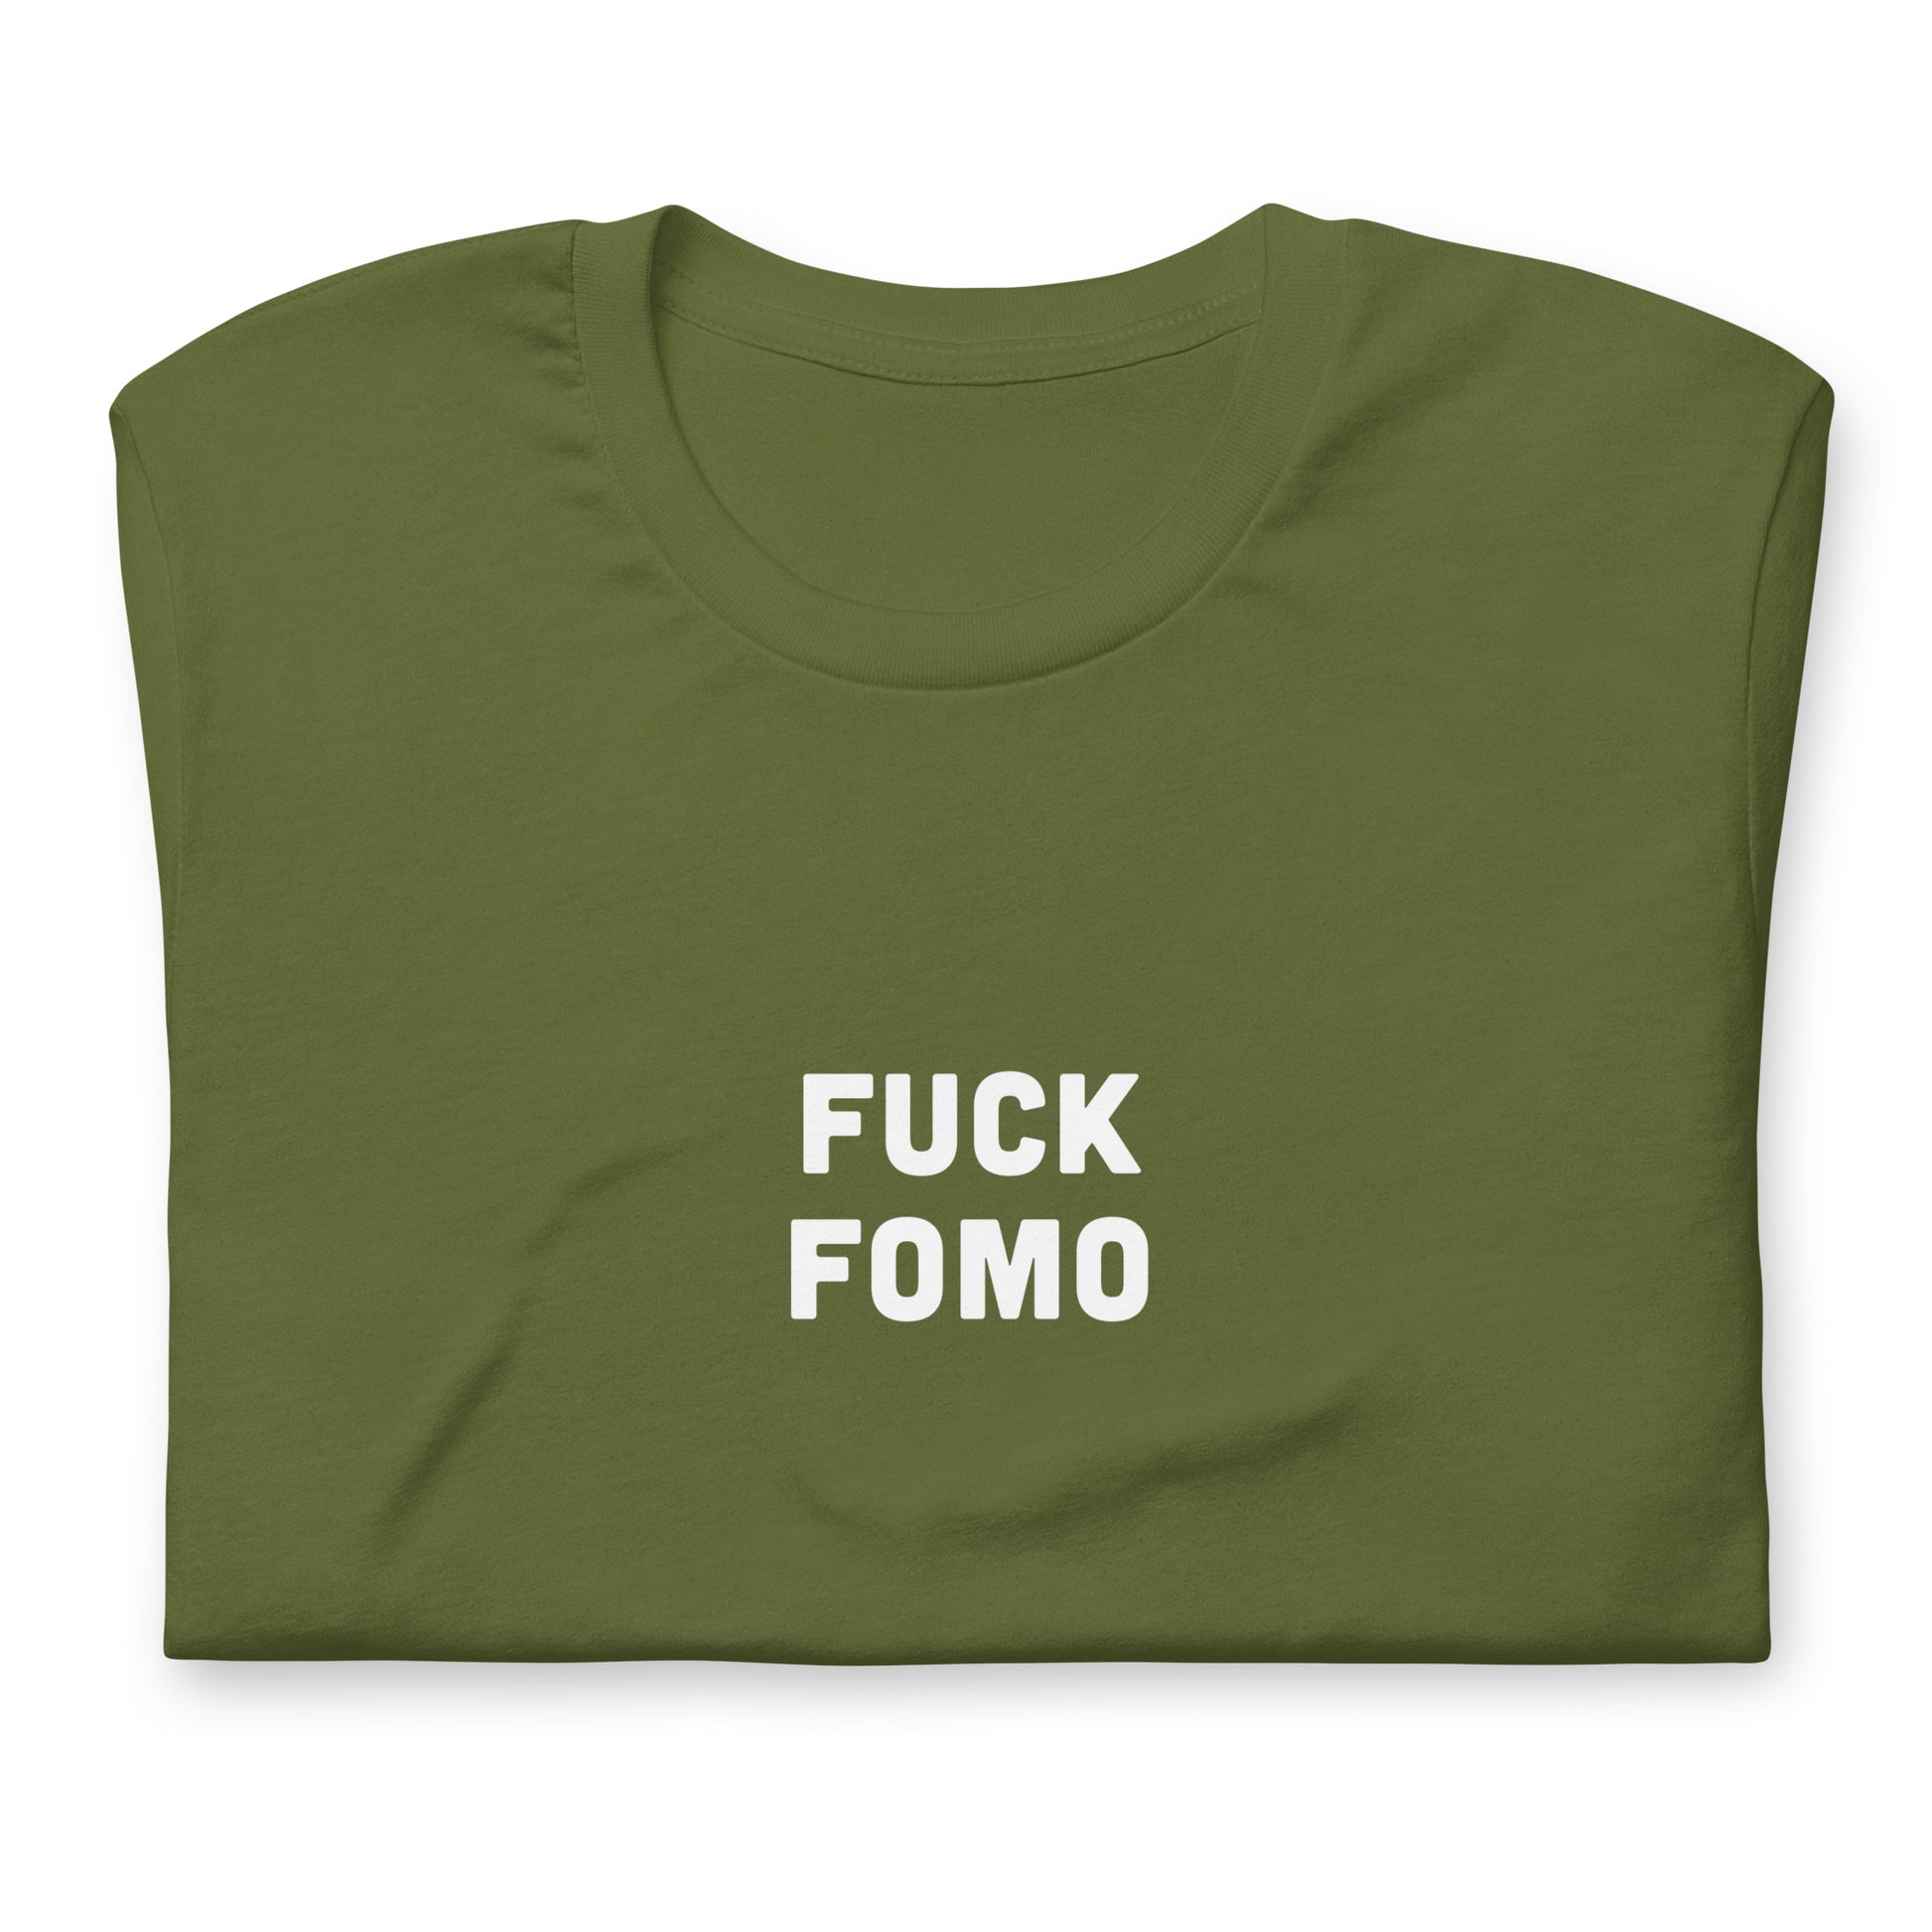 Fuck Fomo T-Shirt Size M Color Navy